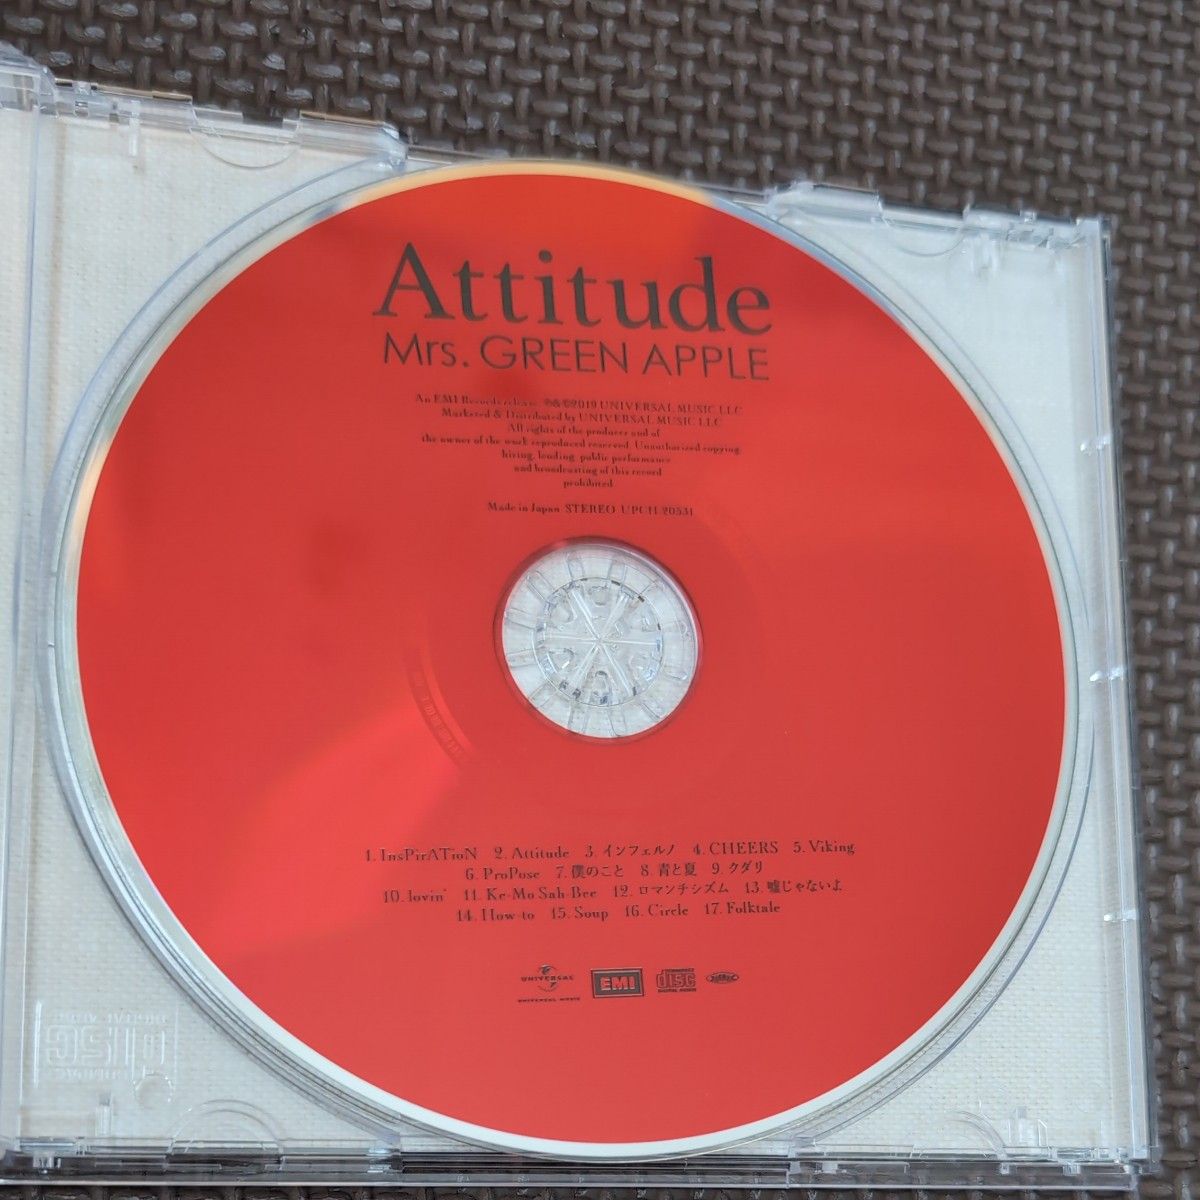 Attitude (通常盤) Mrs GREEN APPLE